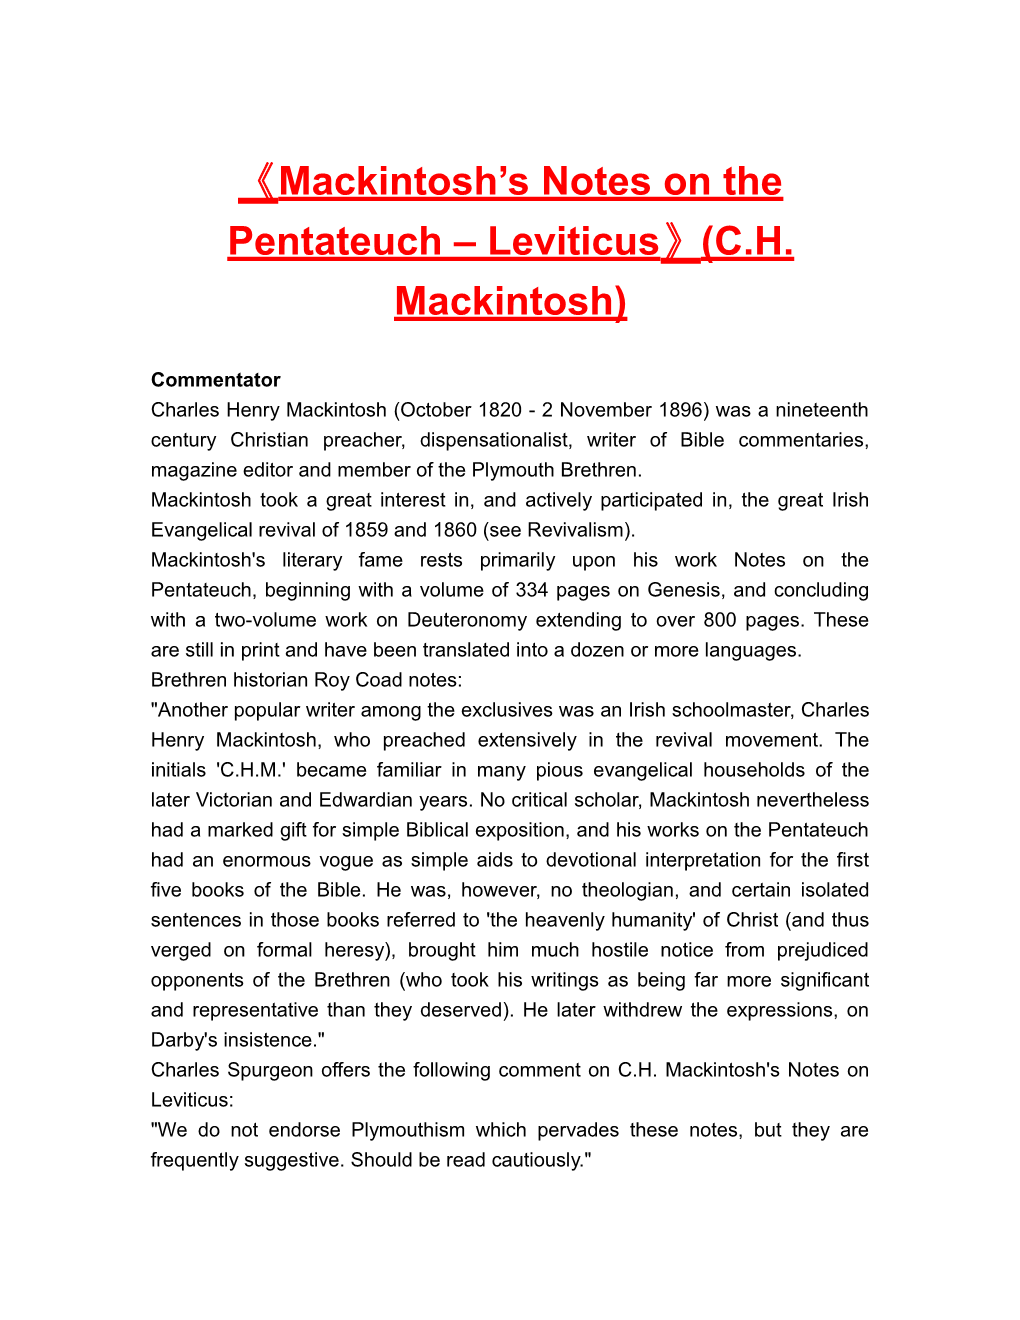 Mackintosh Snoteson the Pentateuch Leviticus (C.H. Mackintosh)